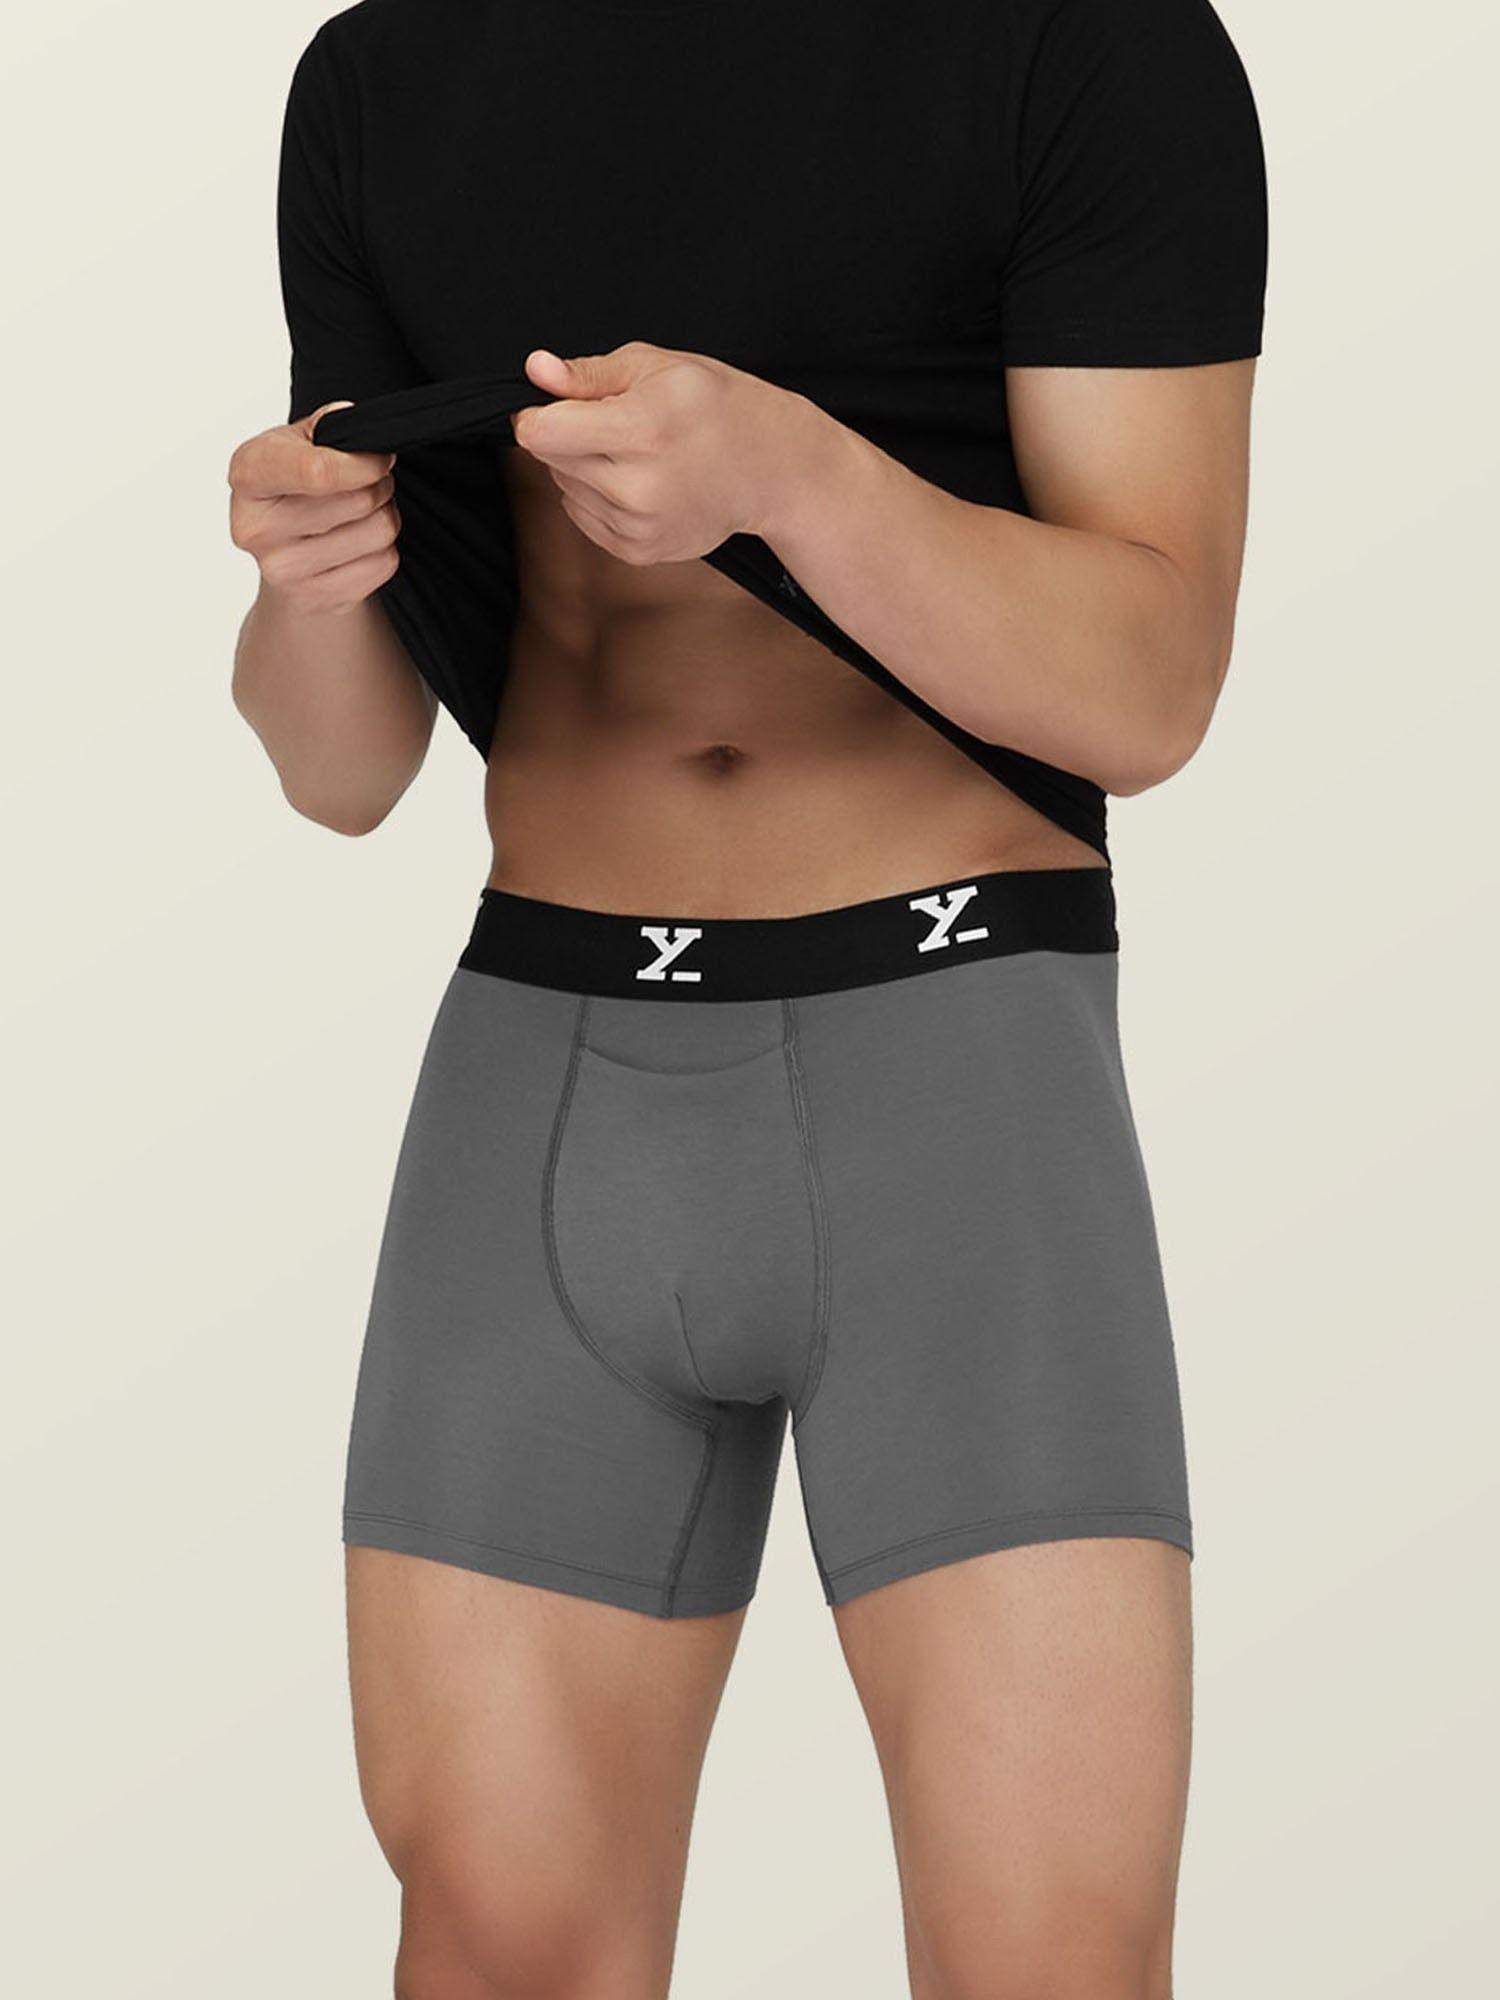 ace modal cotton ultra-soft & breathable boxer briefs for men grey